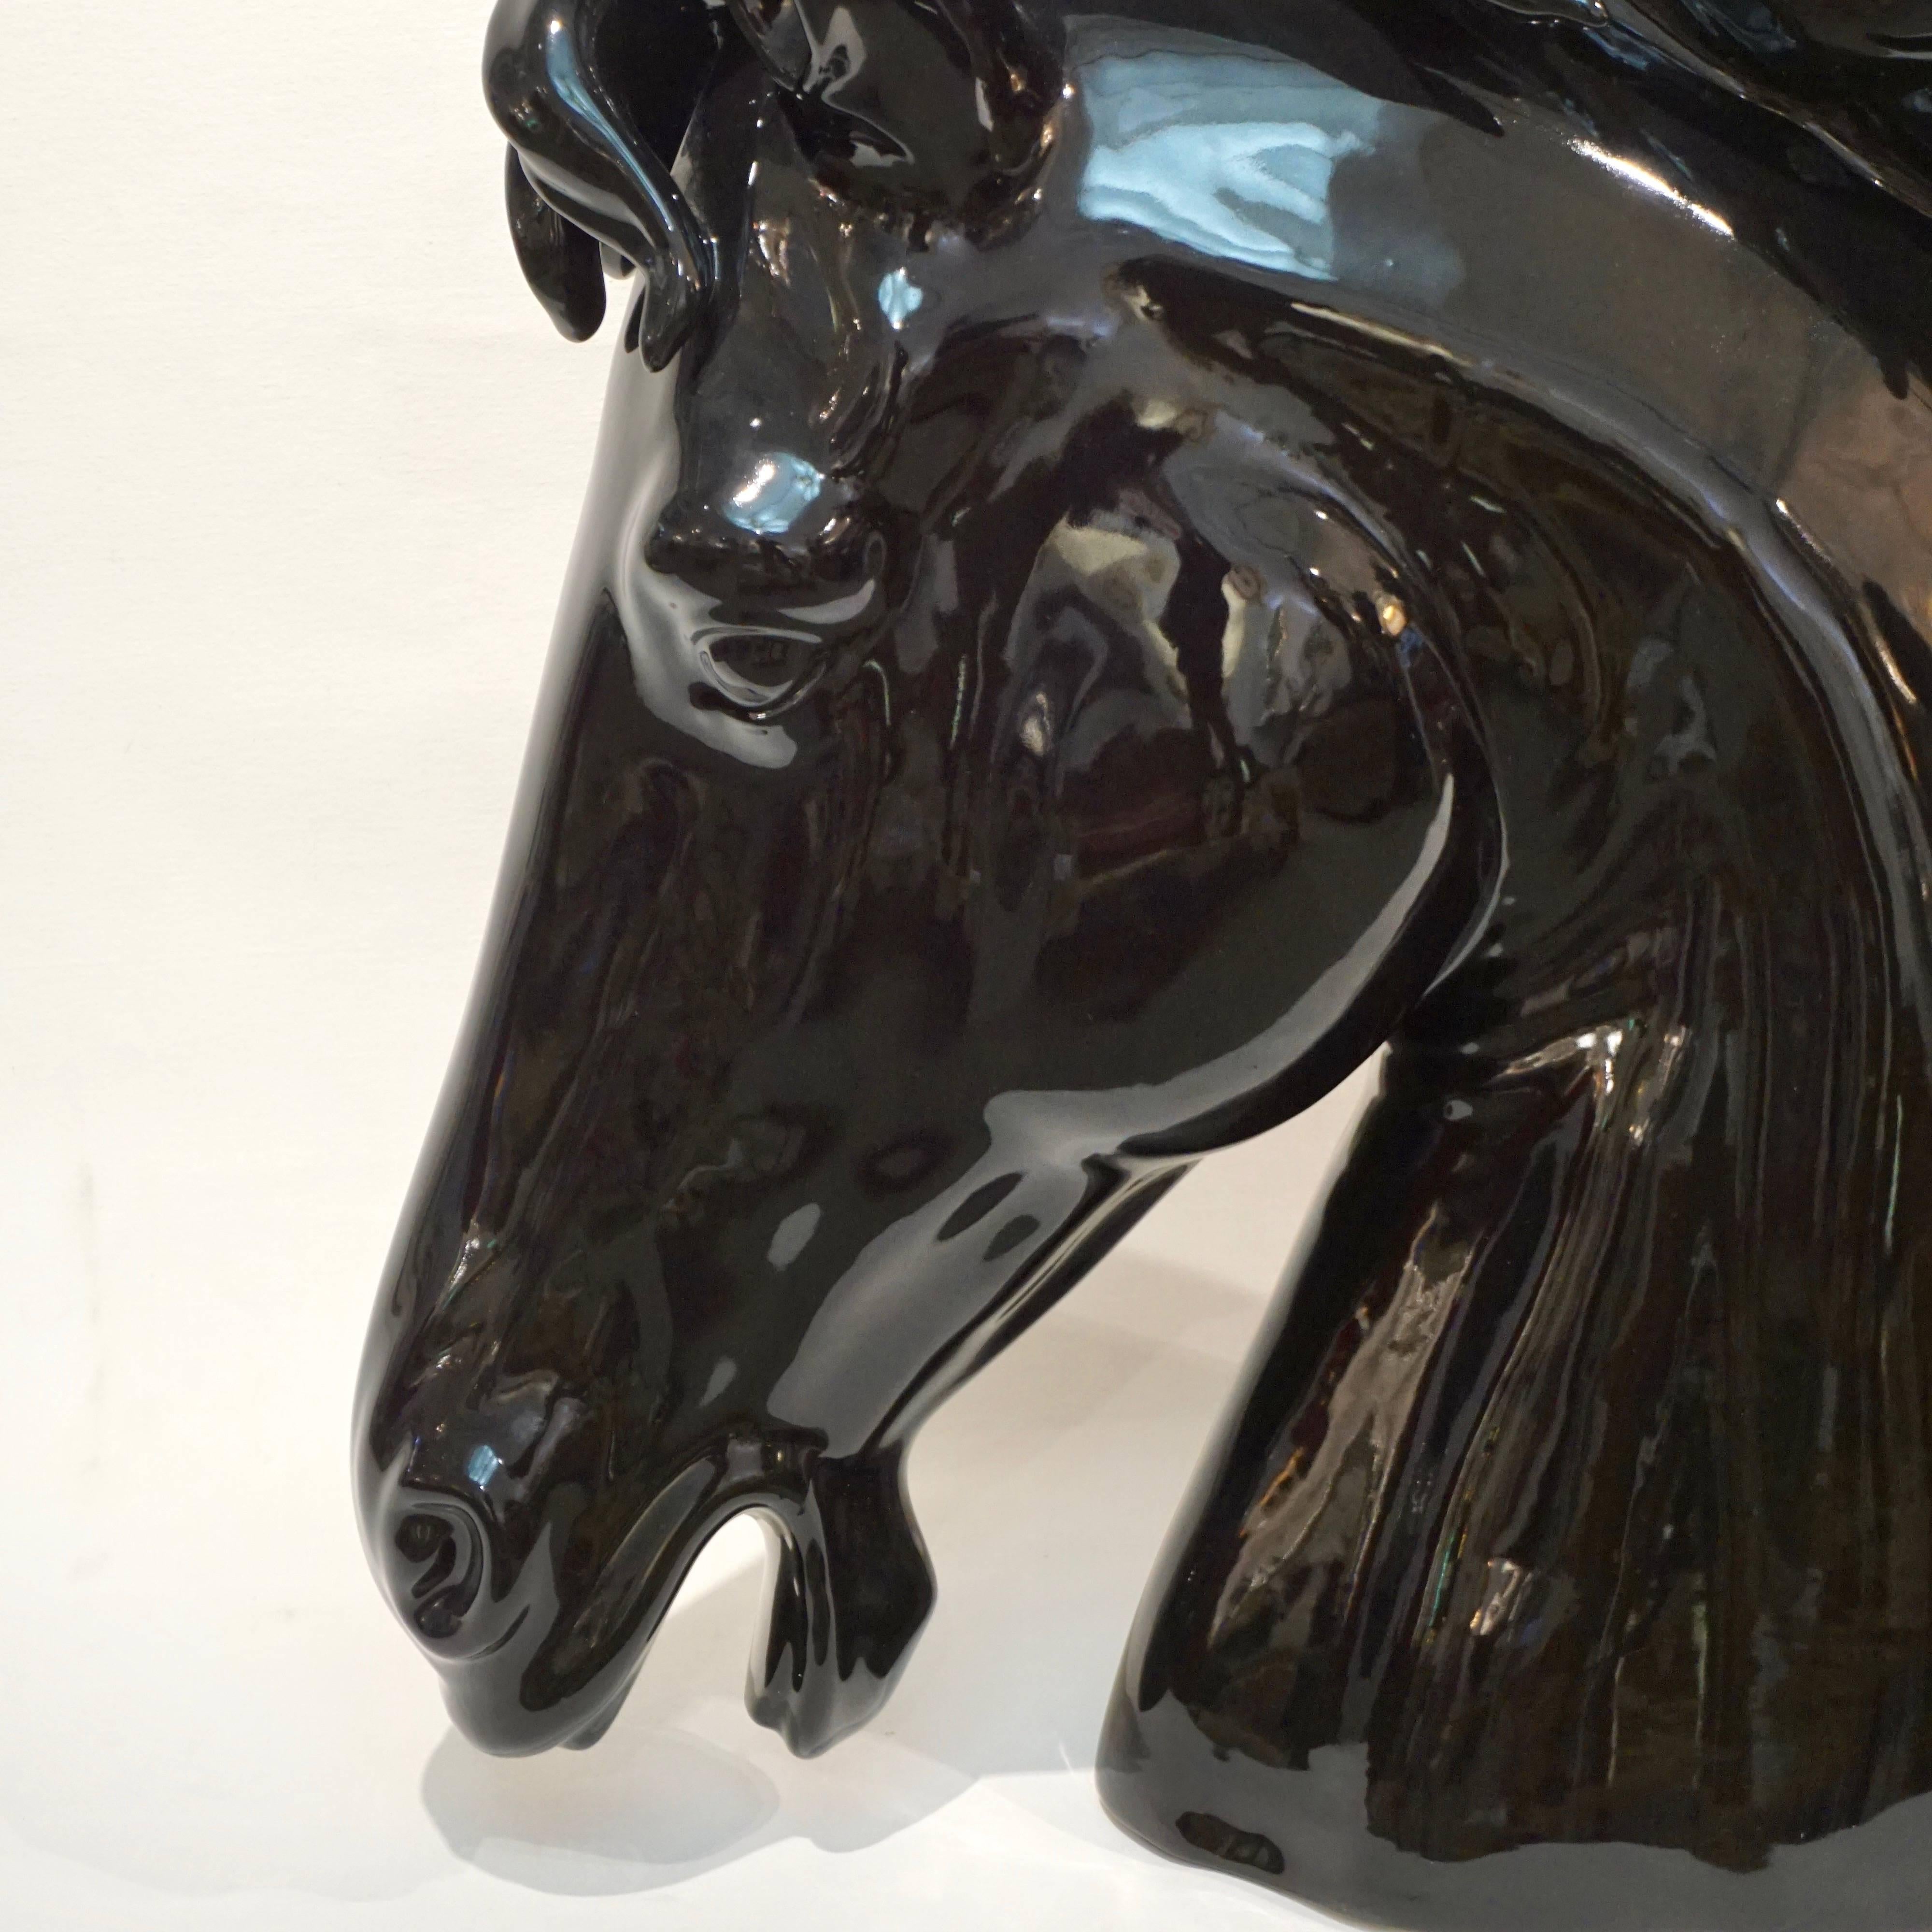 Italian Modern Art Deco Design Oversized Black and White Ceramic Horse Head Sculptures For Sale